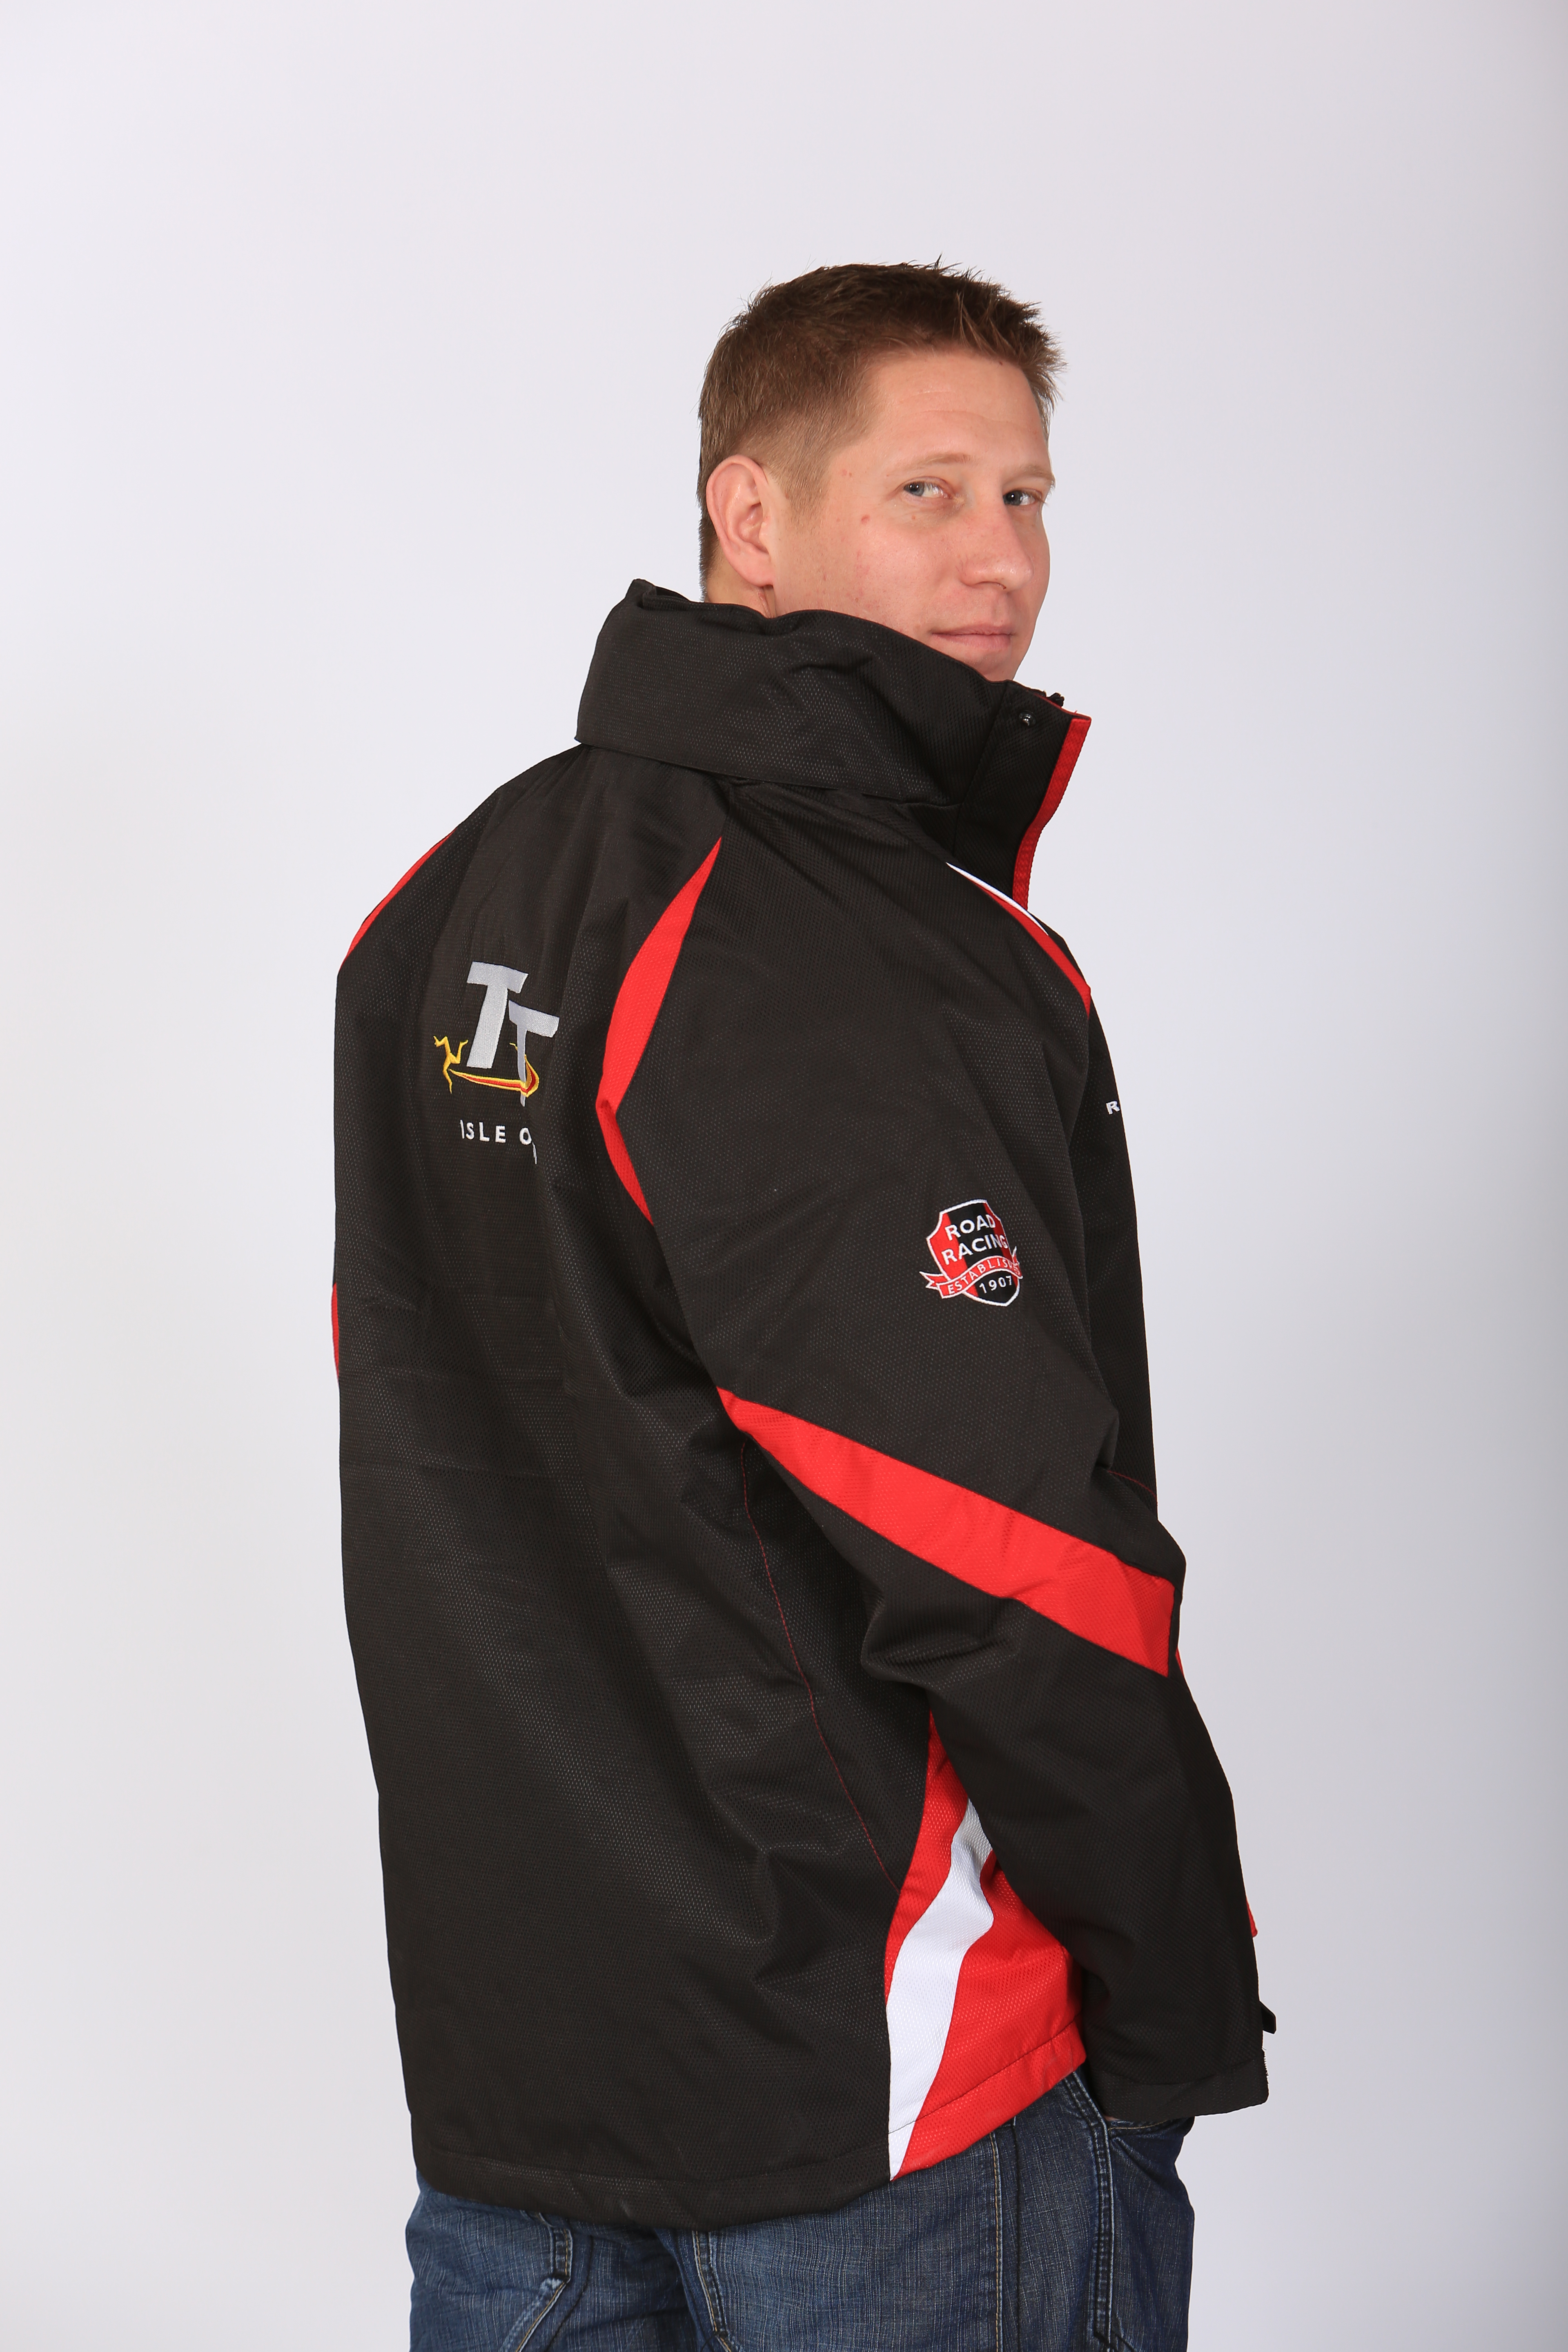 TT 2013 Jacket Black/Red Trim